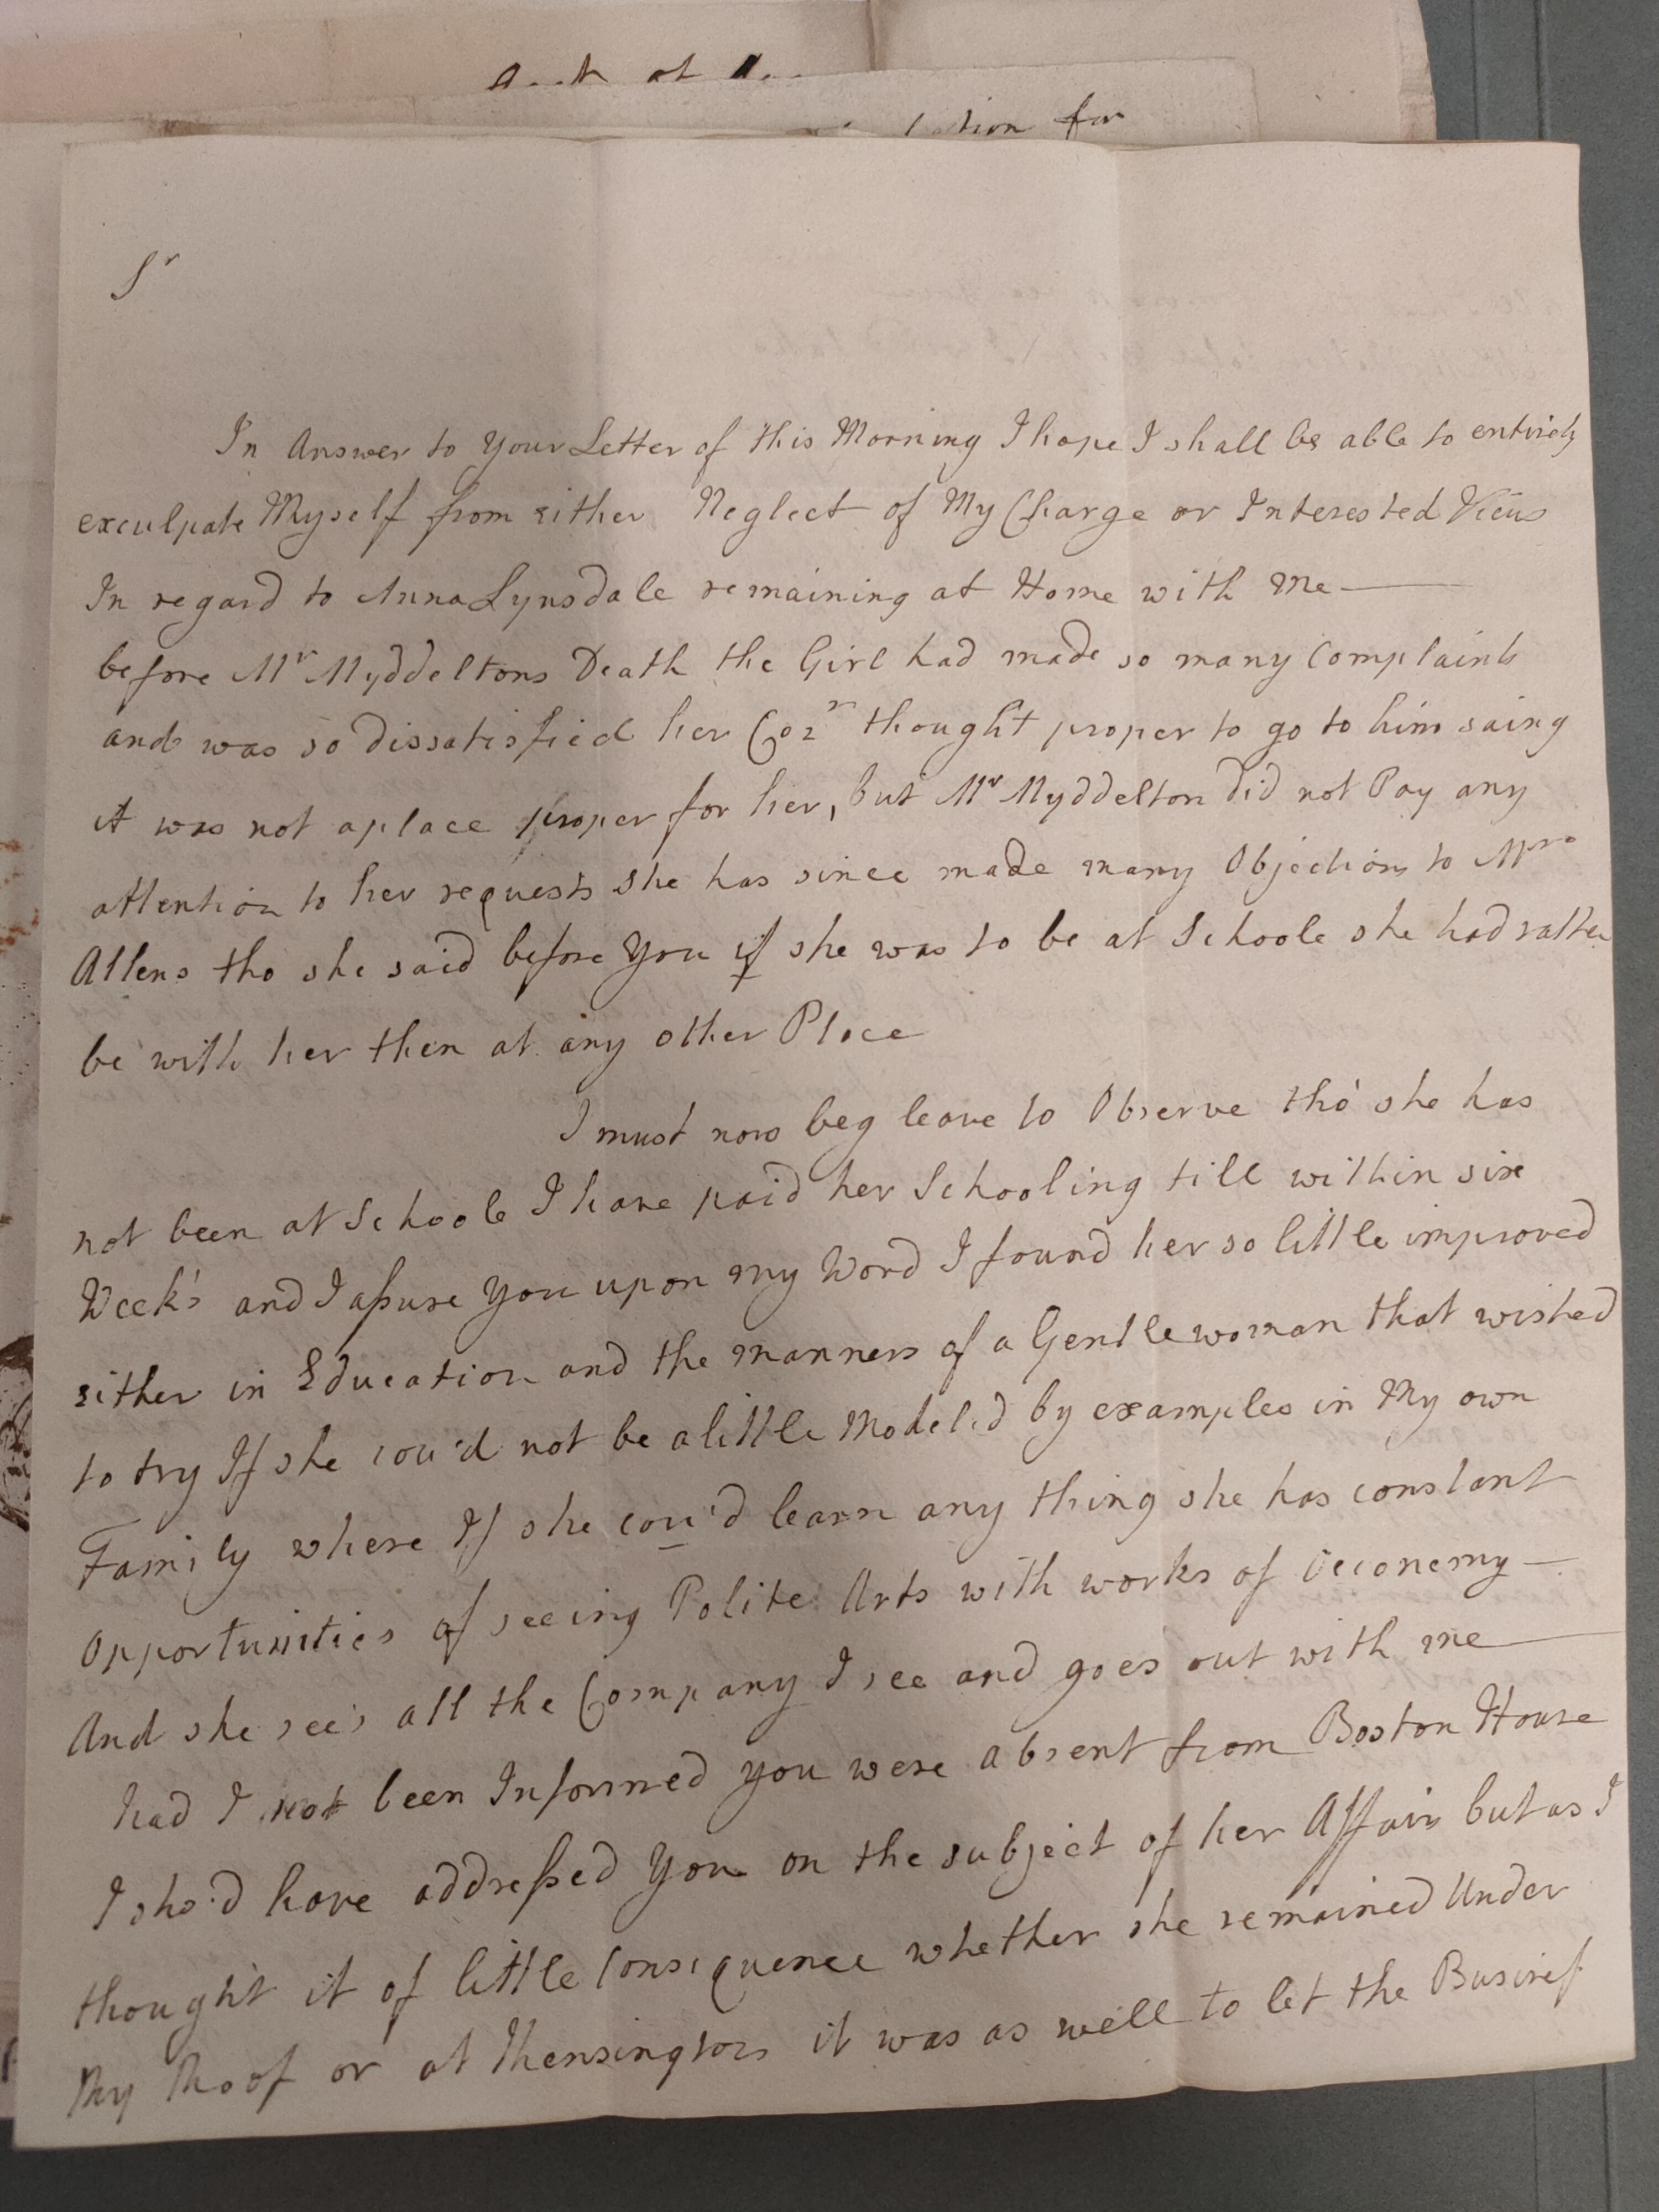 Image #1 of letter: Elizabeth Lister to James Clitherow Esq,  3 October 1798